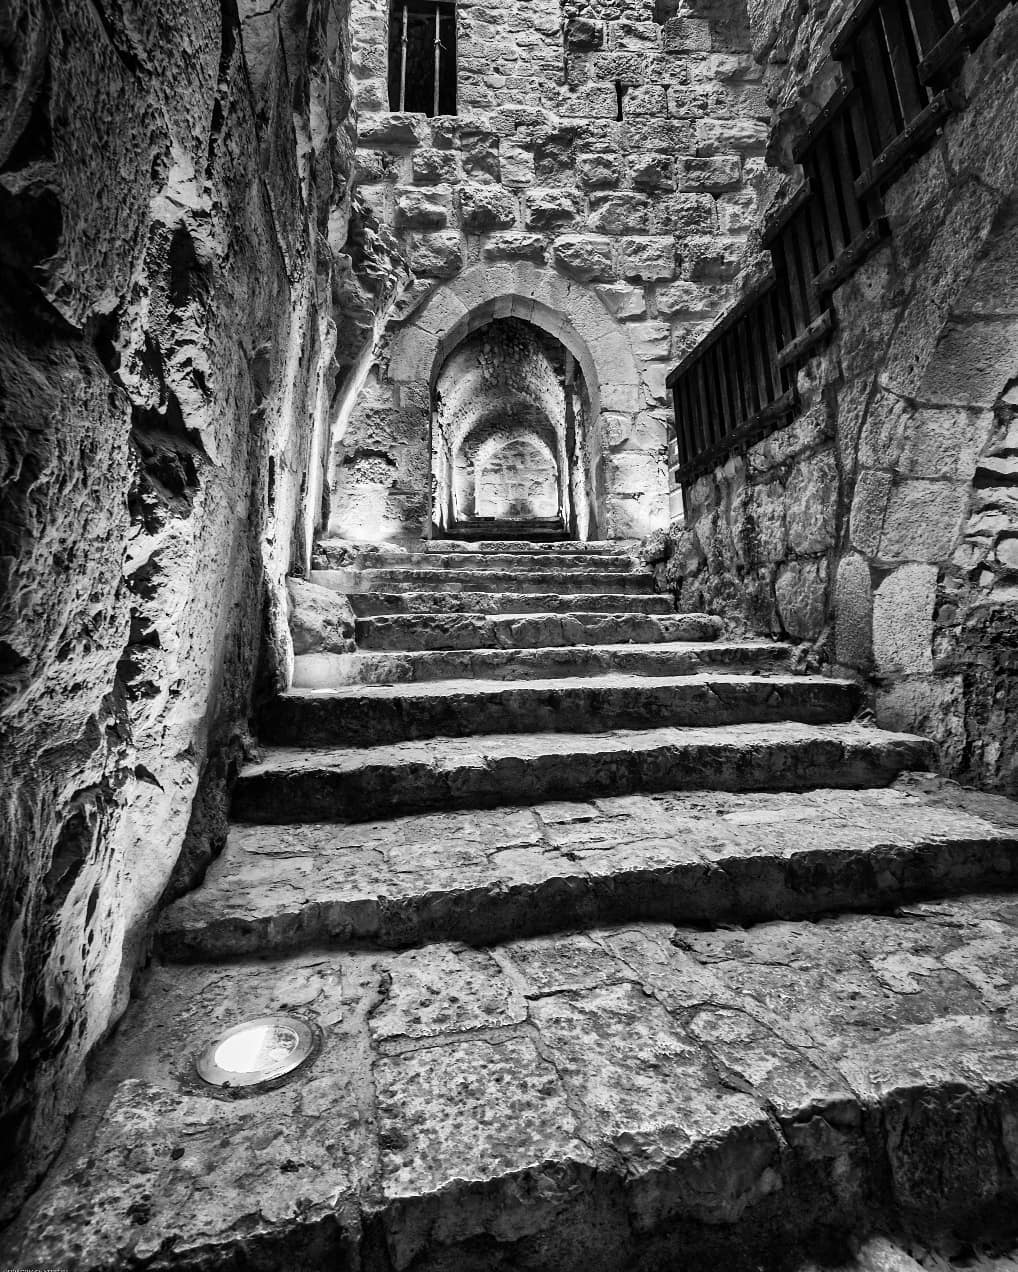 Ajloun Castle, Jordan
.
.
.
.
#ic_bw #bnw_globe #blackandwhite #blackandwhitephotography #instablackandwhite #bw_lover #bnw_globe #bnw #bnwphotography #bnwmood #ic_architecture #history #travelphotography #castle #ruin #ruins #bnw_ruins #blackandwhiteisworththefight #bw_photography #jordan #crusader #igersbnw #picoftheday #natgeoyourshot #natgeotravel #photowall_bw #bnw_fanatics #ngtindia #doubleyedge